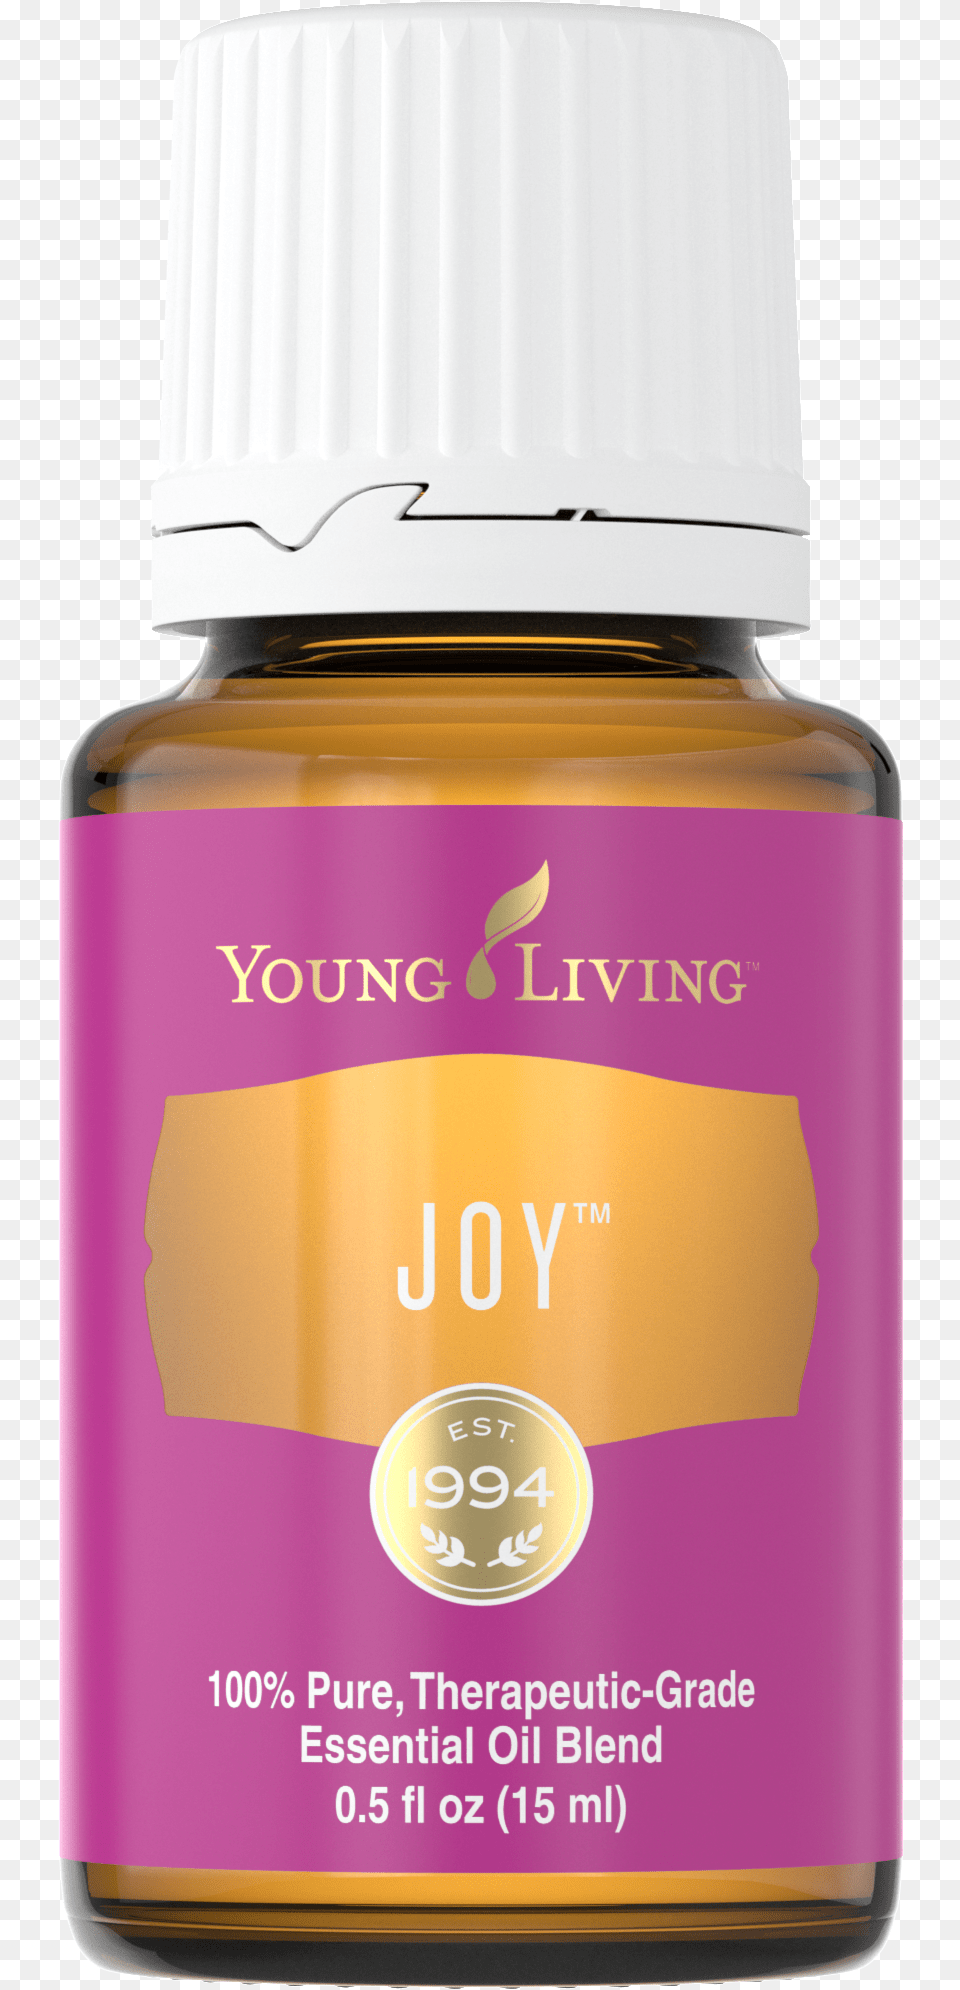 Joy Joy 5 Ml Young Living, Bottle, Cosmetics, Perfume Free Png